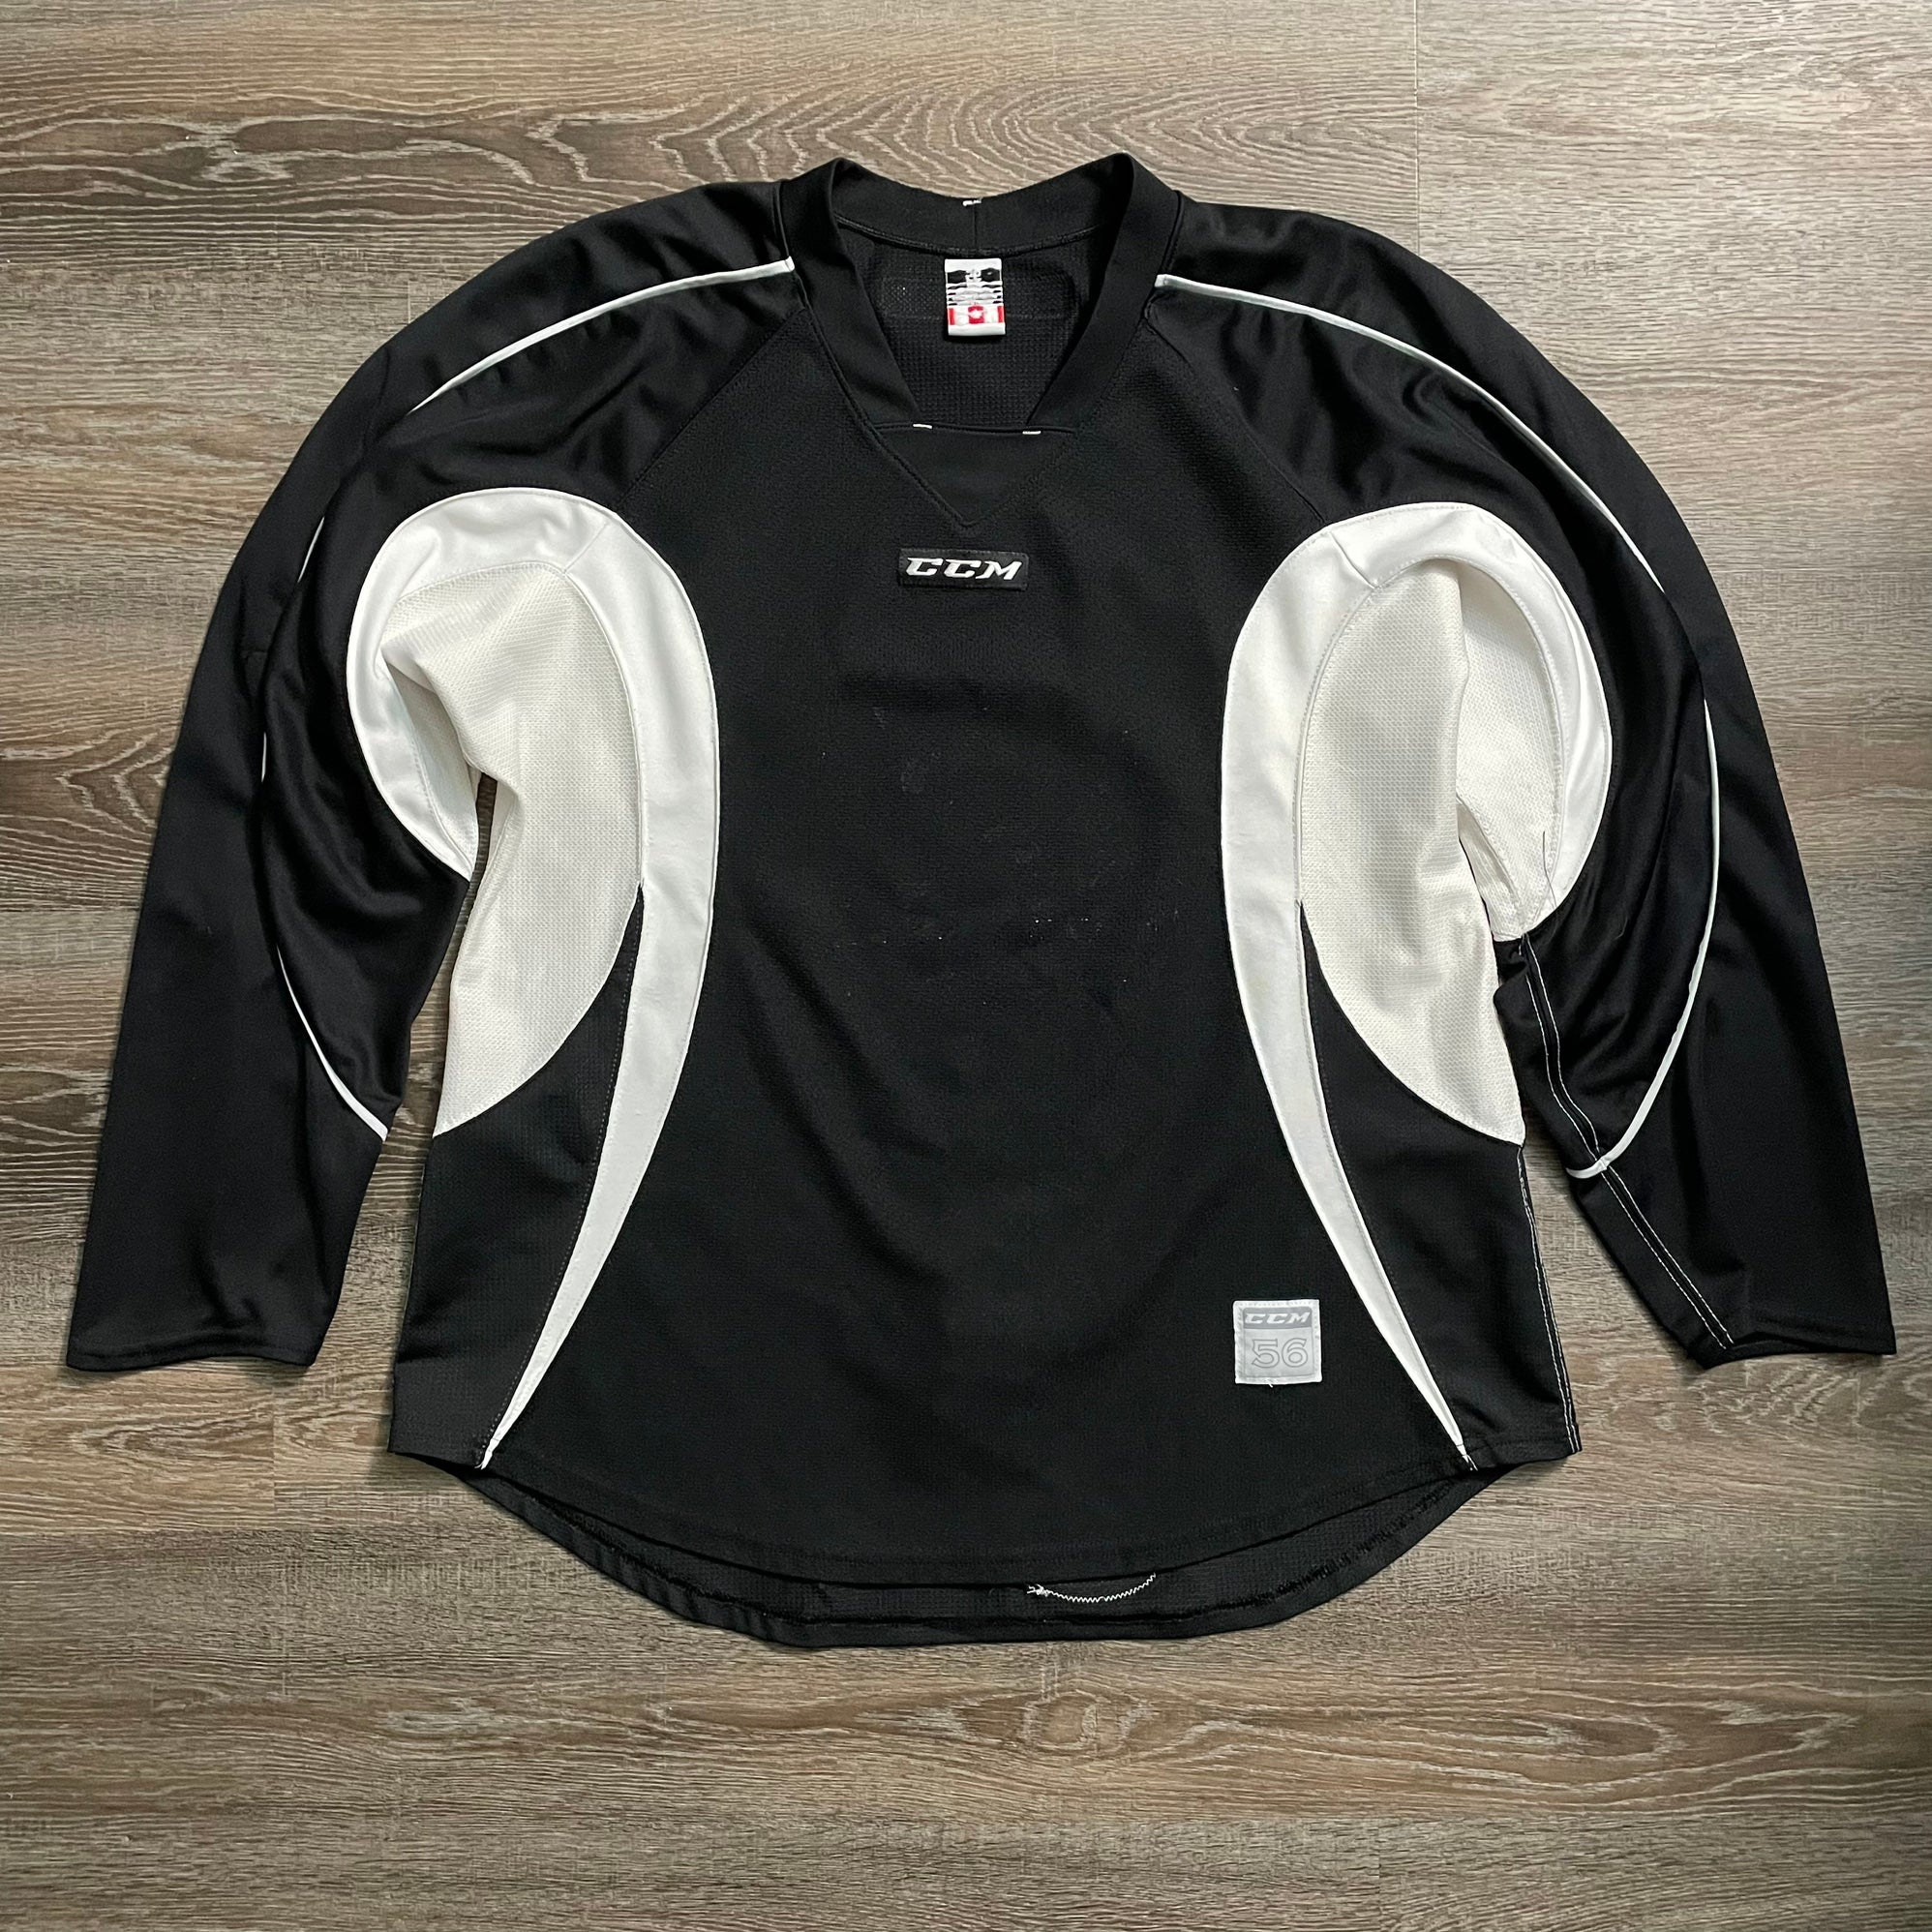 Toronto Marlies Pro Stock AHL Hockey Jersey 56 Practice worn Made in Canada